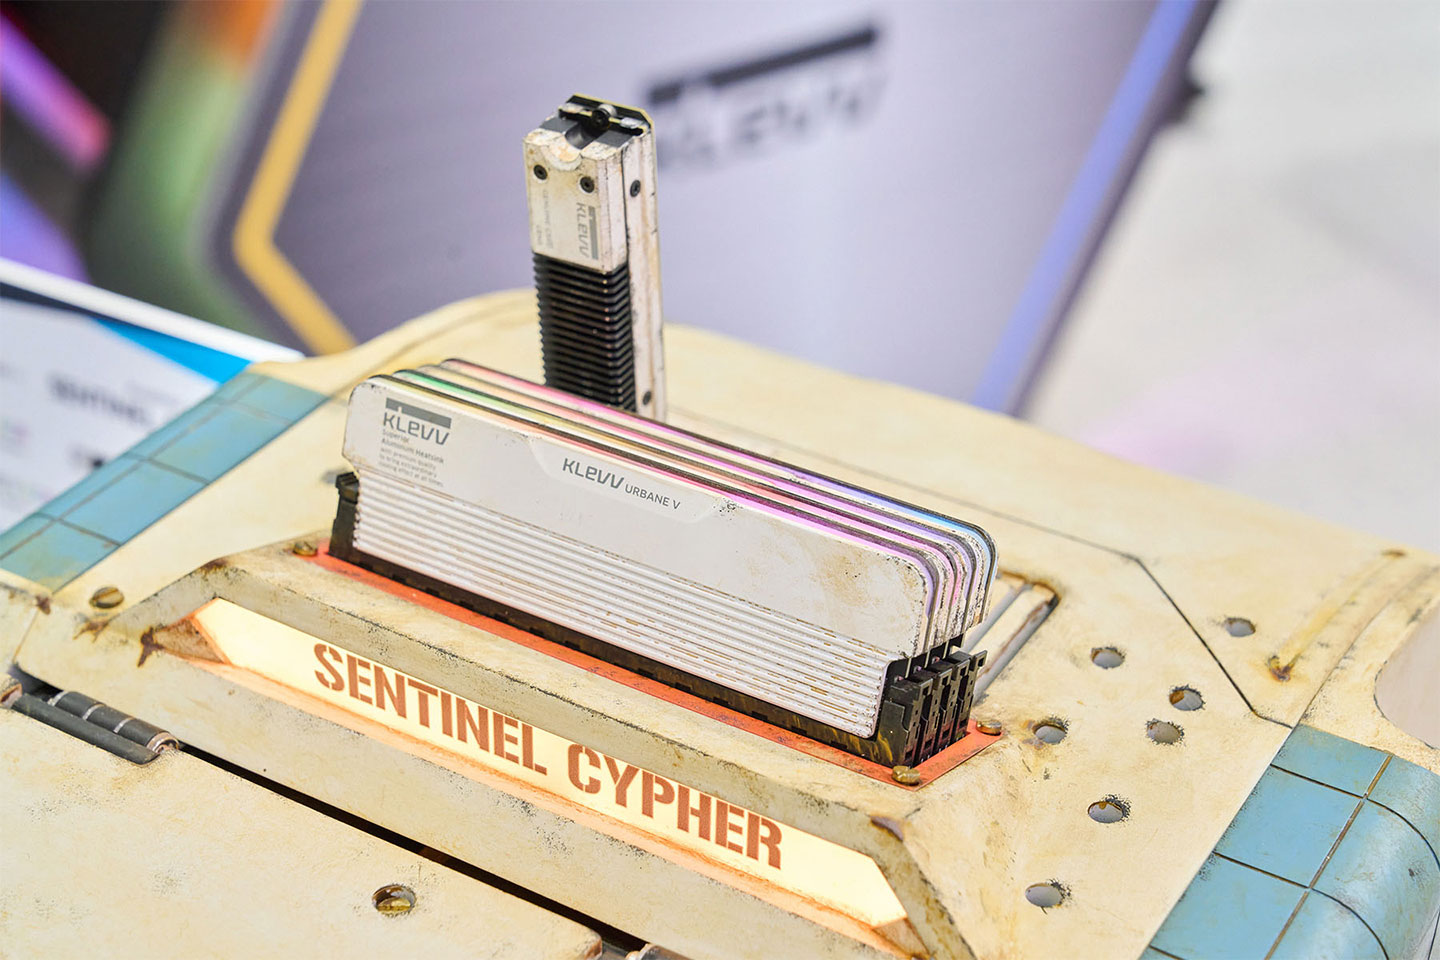 Sentinel Cypher 機頂配了 KLEVV 的 URBANE V RGB 記憶體與直立式安裝的 GENUINE G560 SSD，可以發現連零件模組也很細膩地做了生銹、污損的舊化風格。